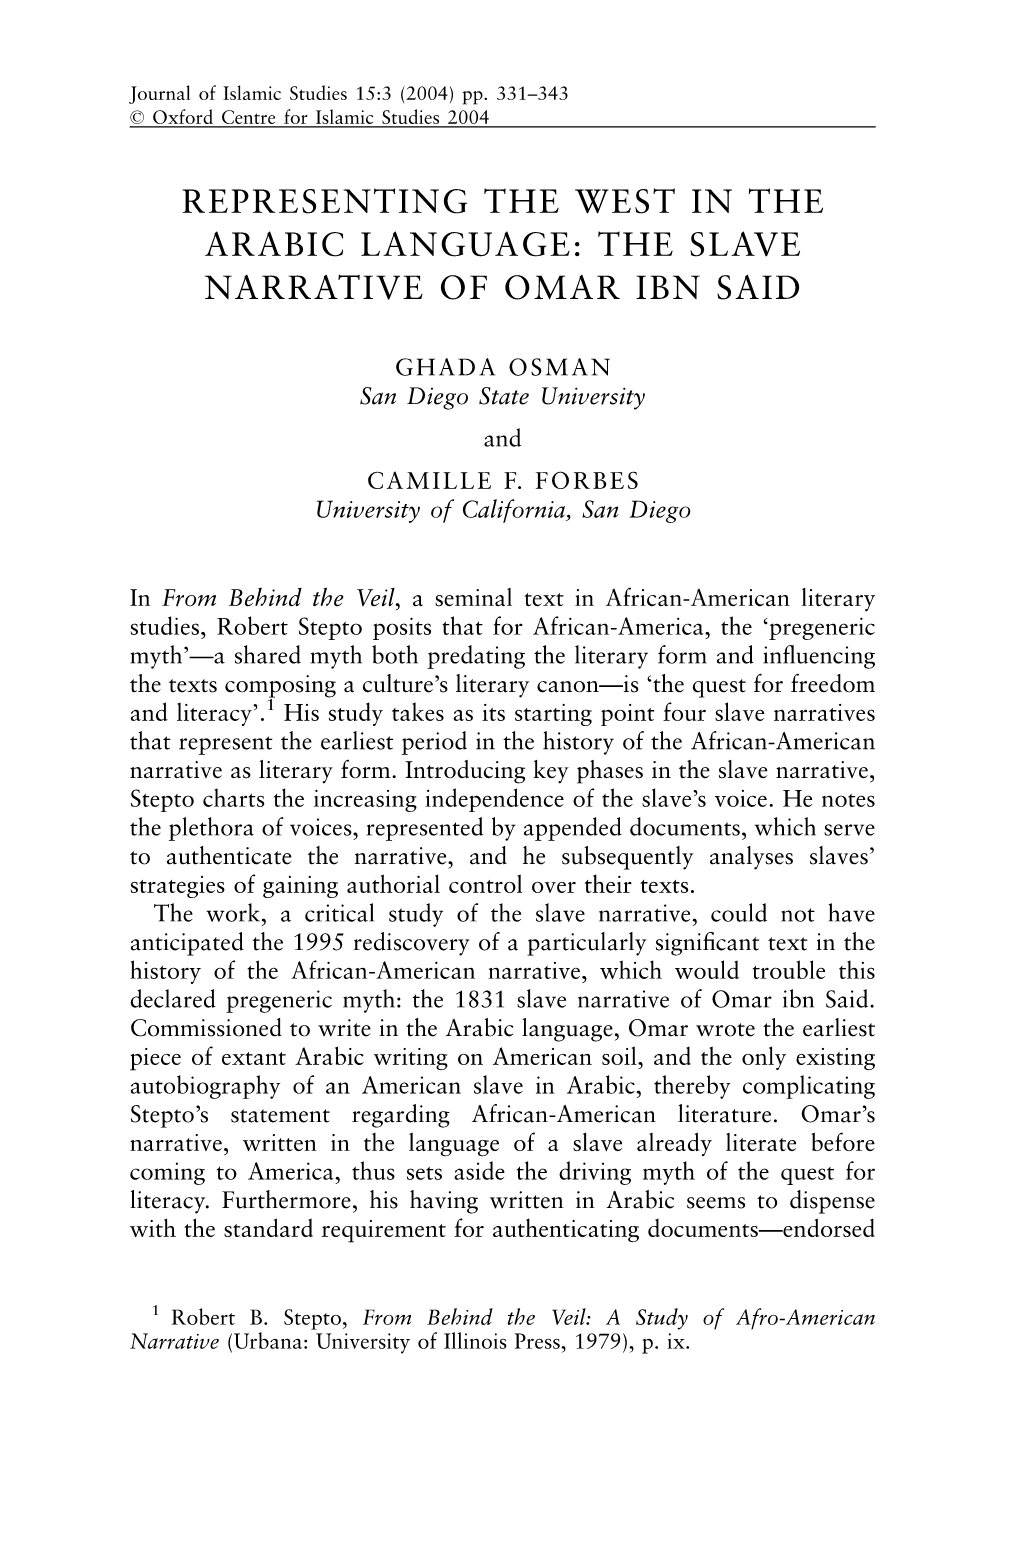 The Slave Narrative of Omar Ibn Said